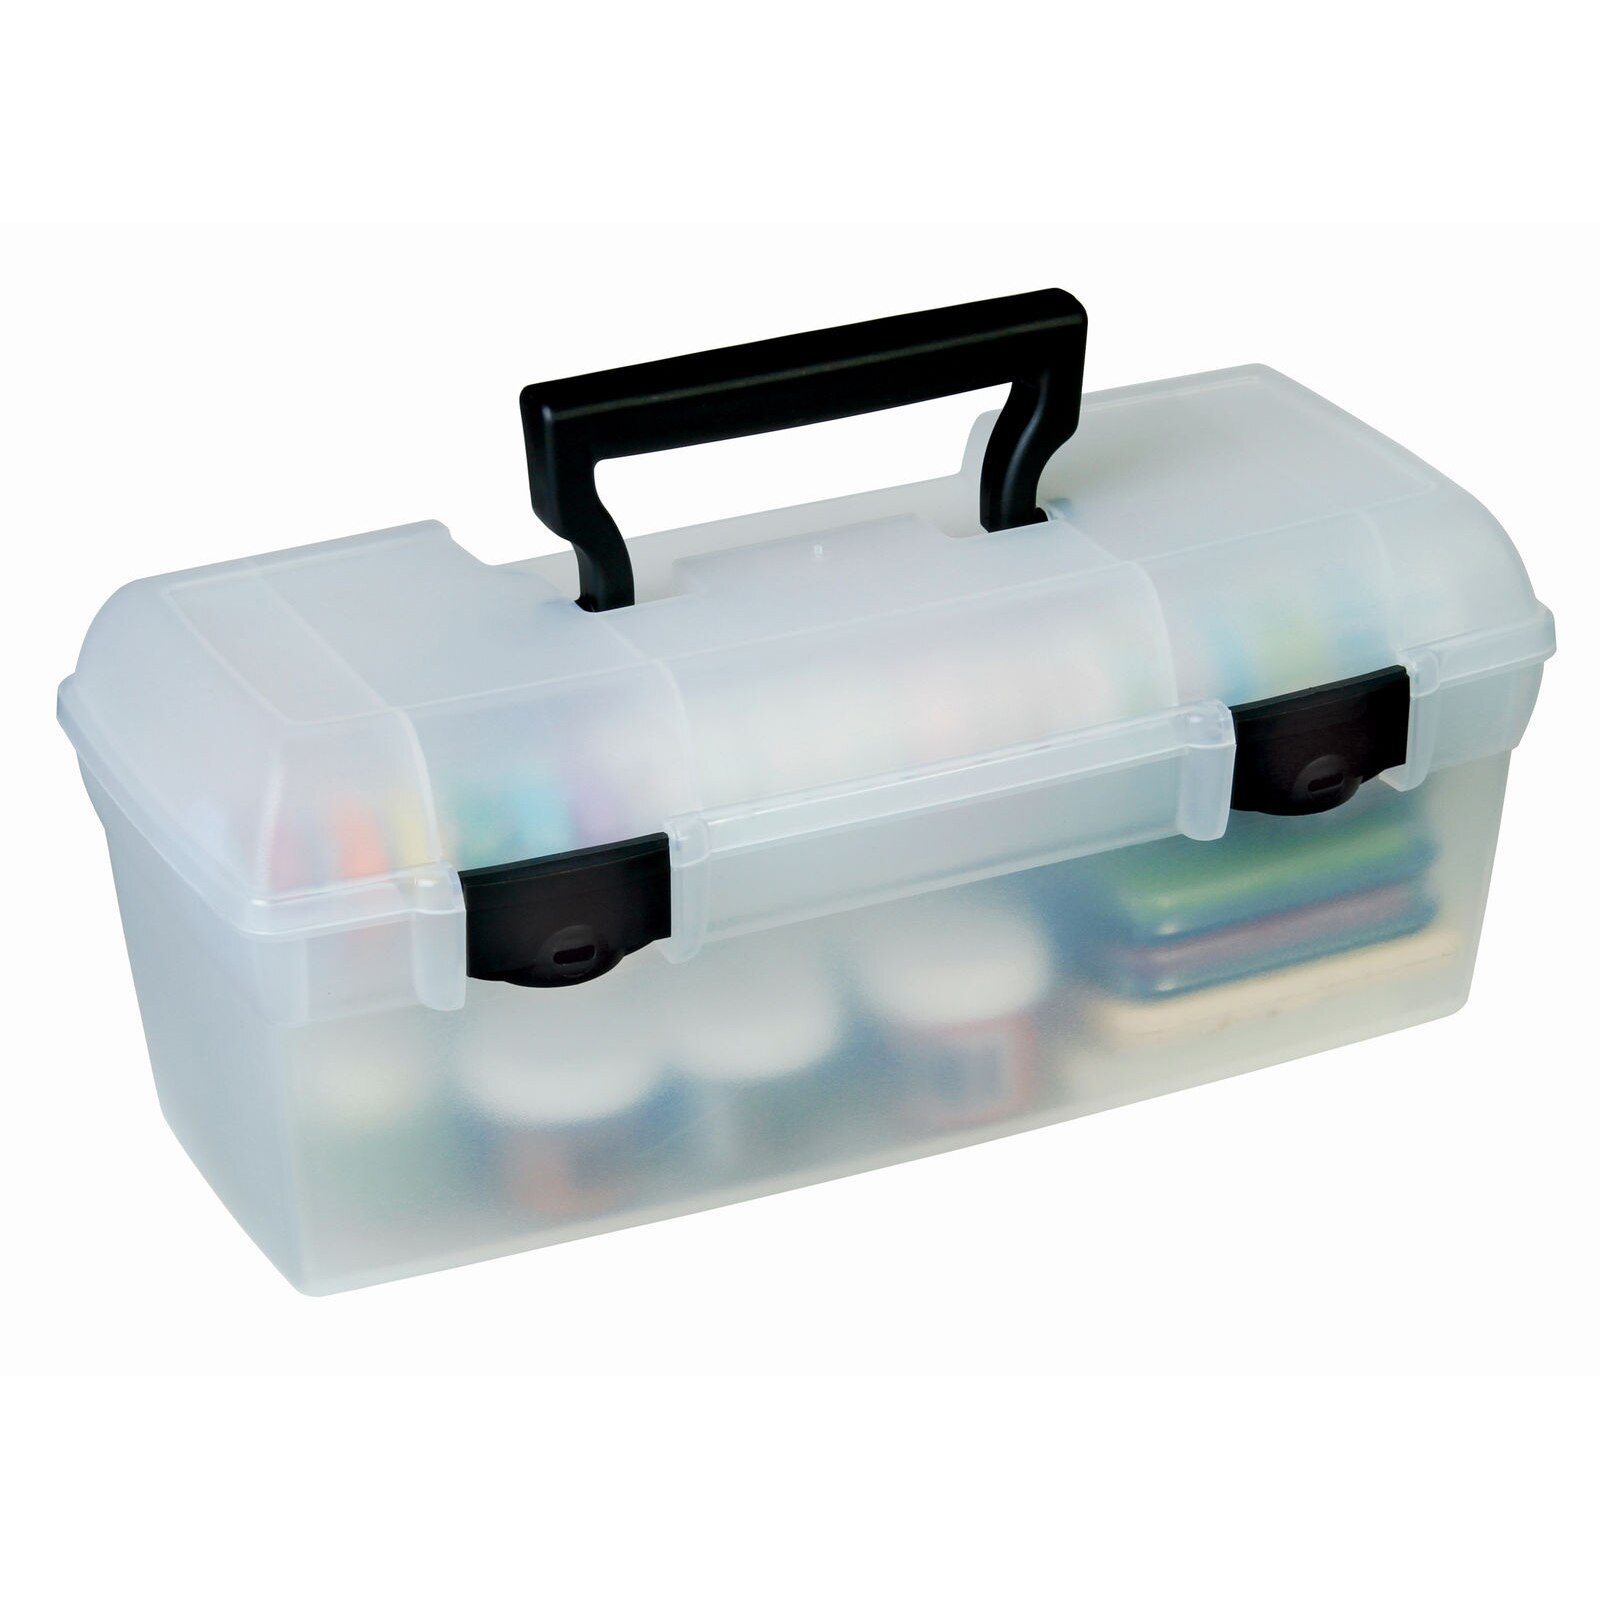 ArtBin Essentials Lift Out Tray Box